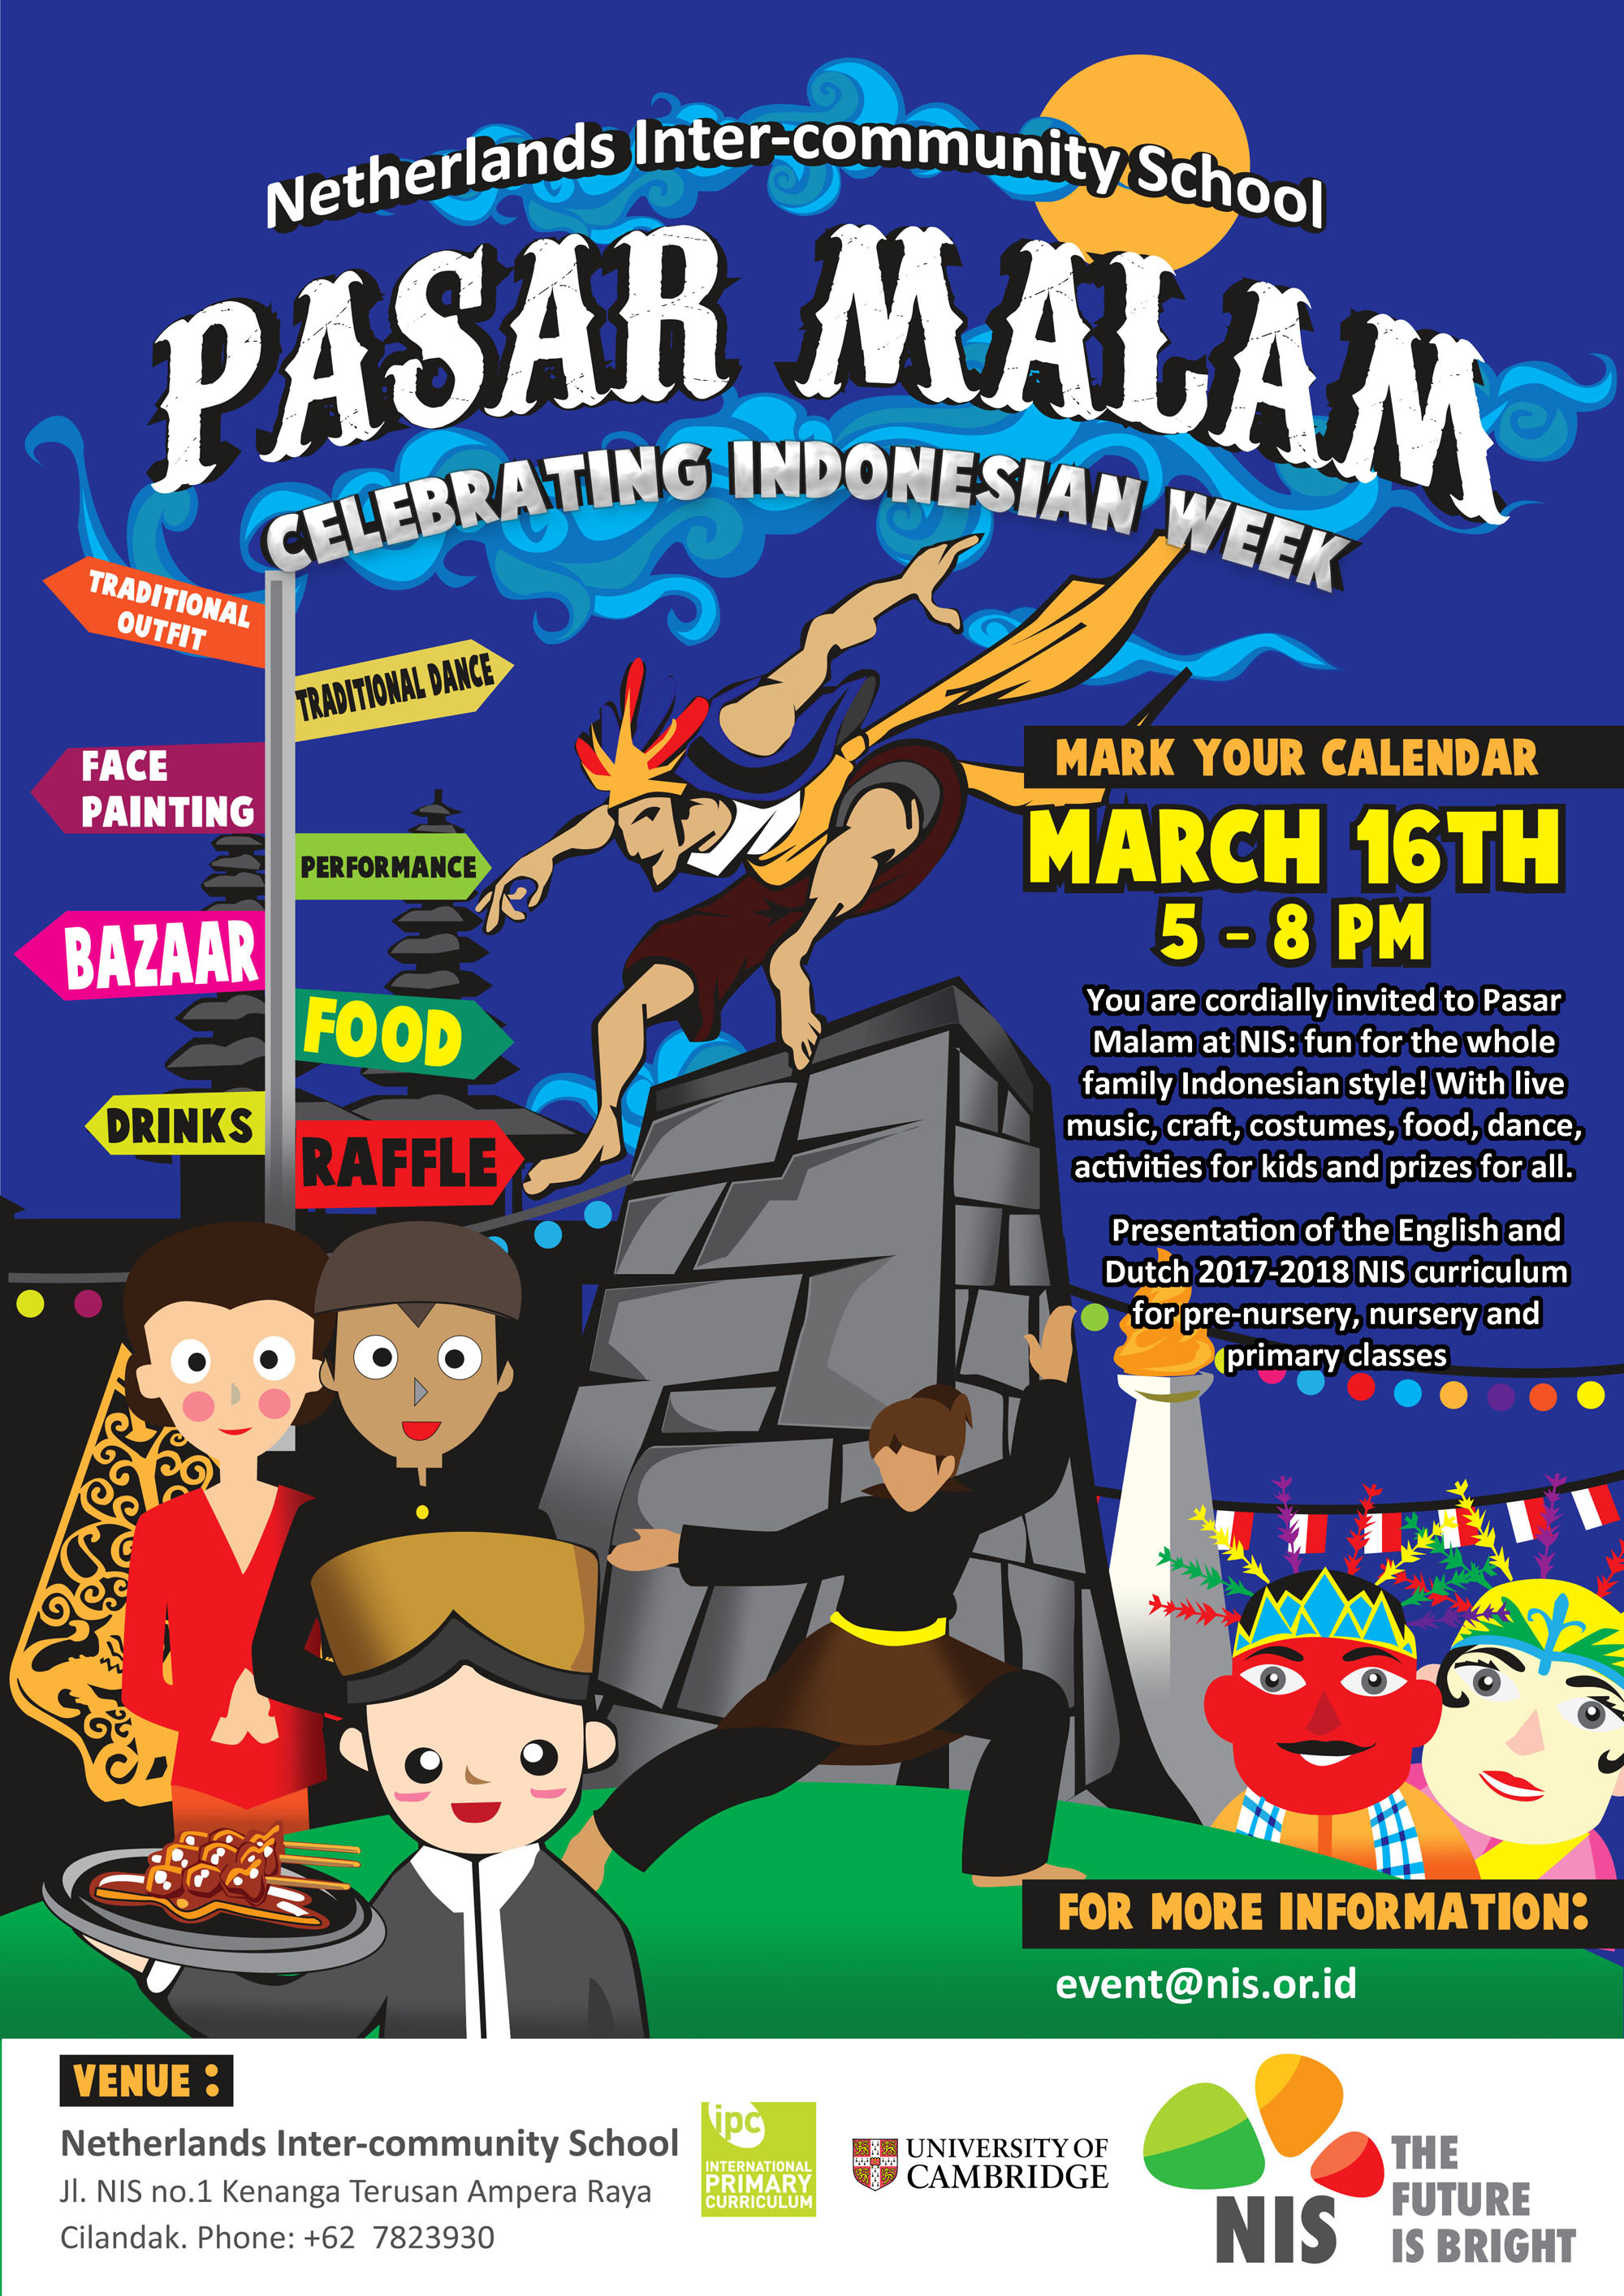 Pasar Malam: Celebrating Indonesian Week